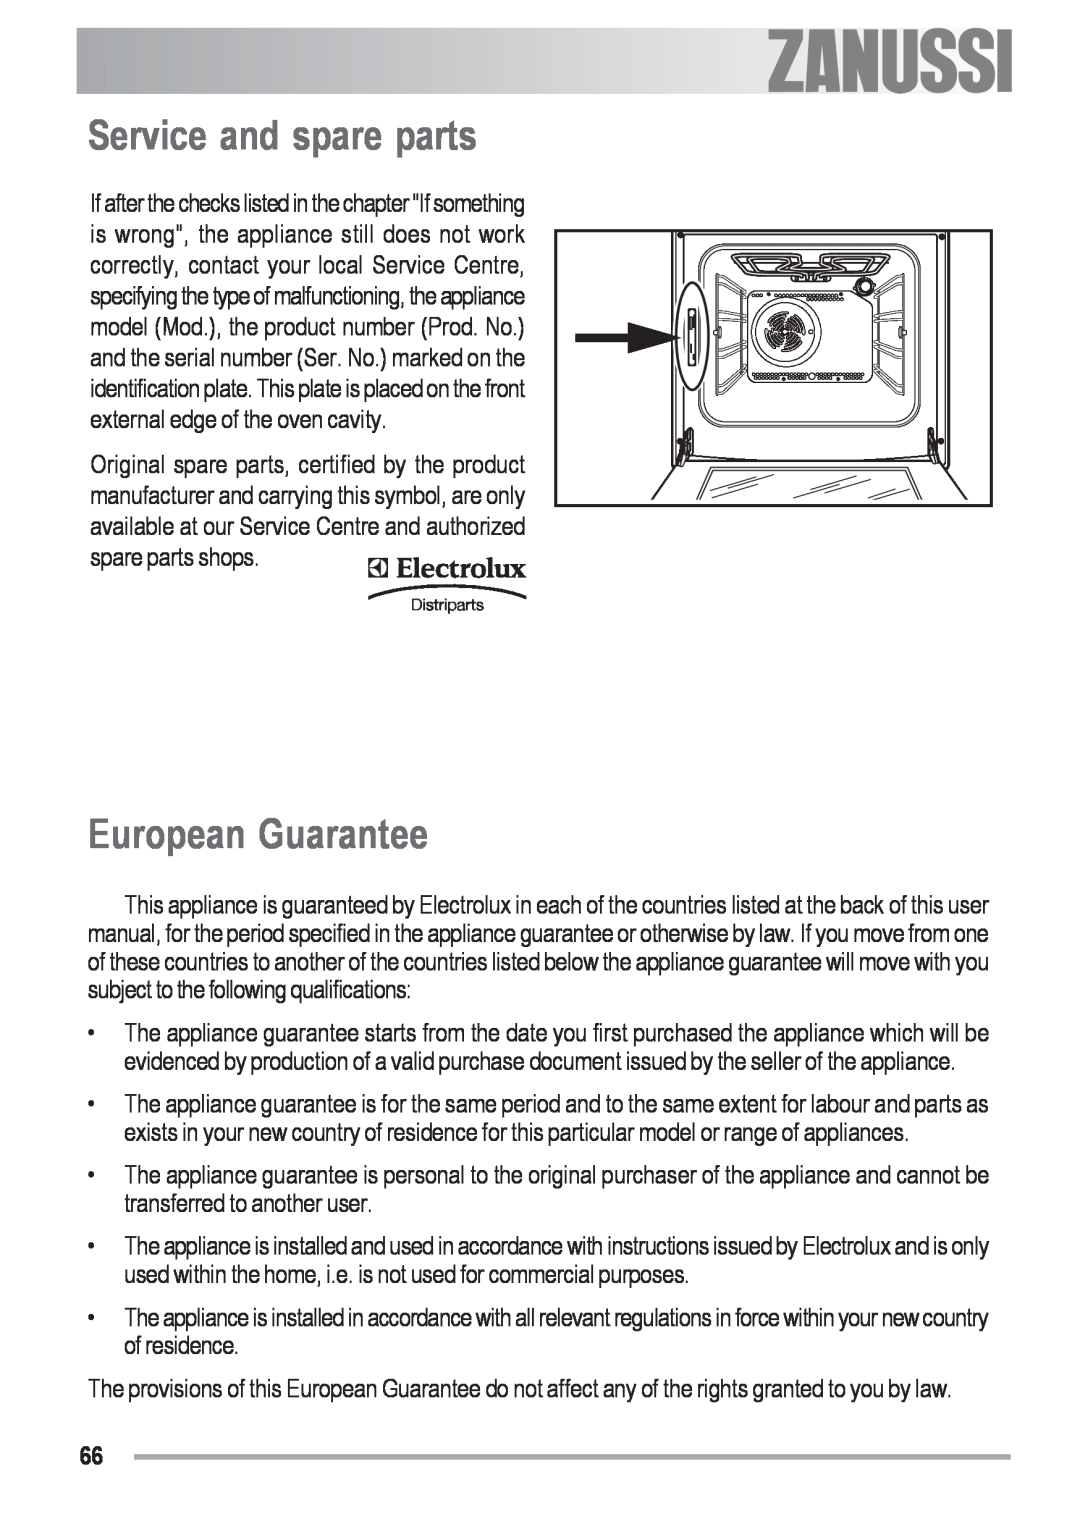 Zanussi ZOB 590 manual Service and spare parts, European Guarantee, electrolux 